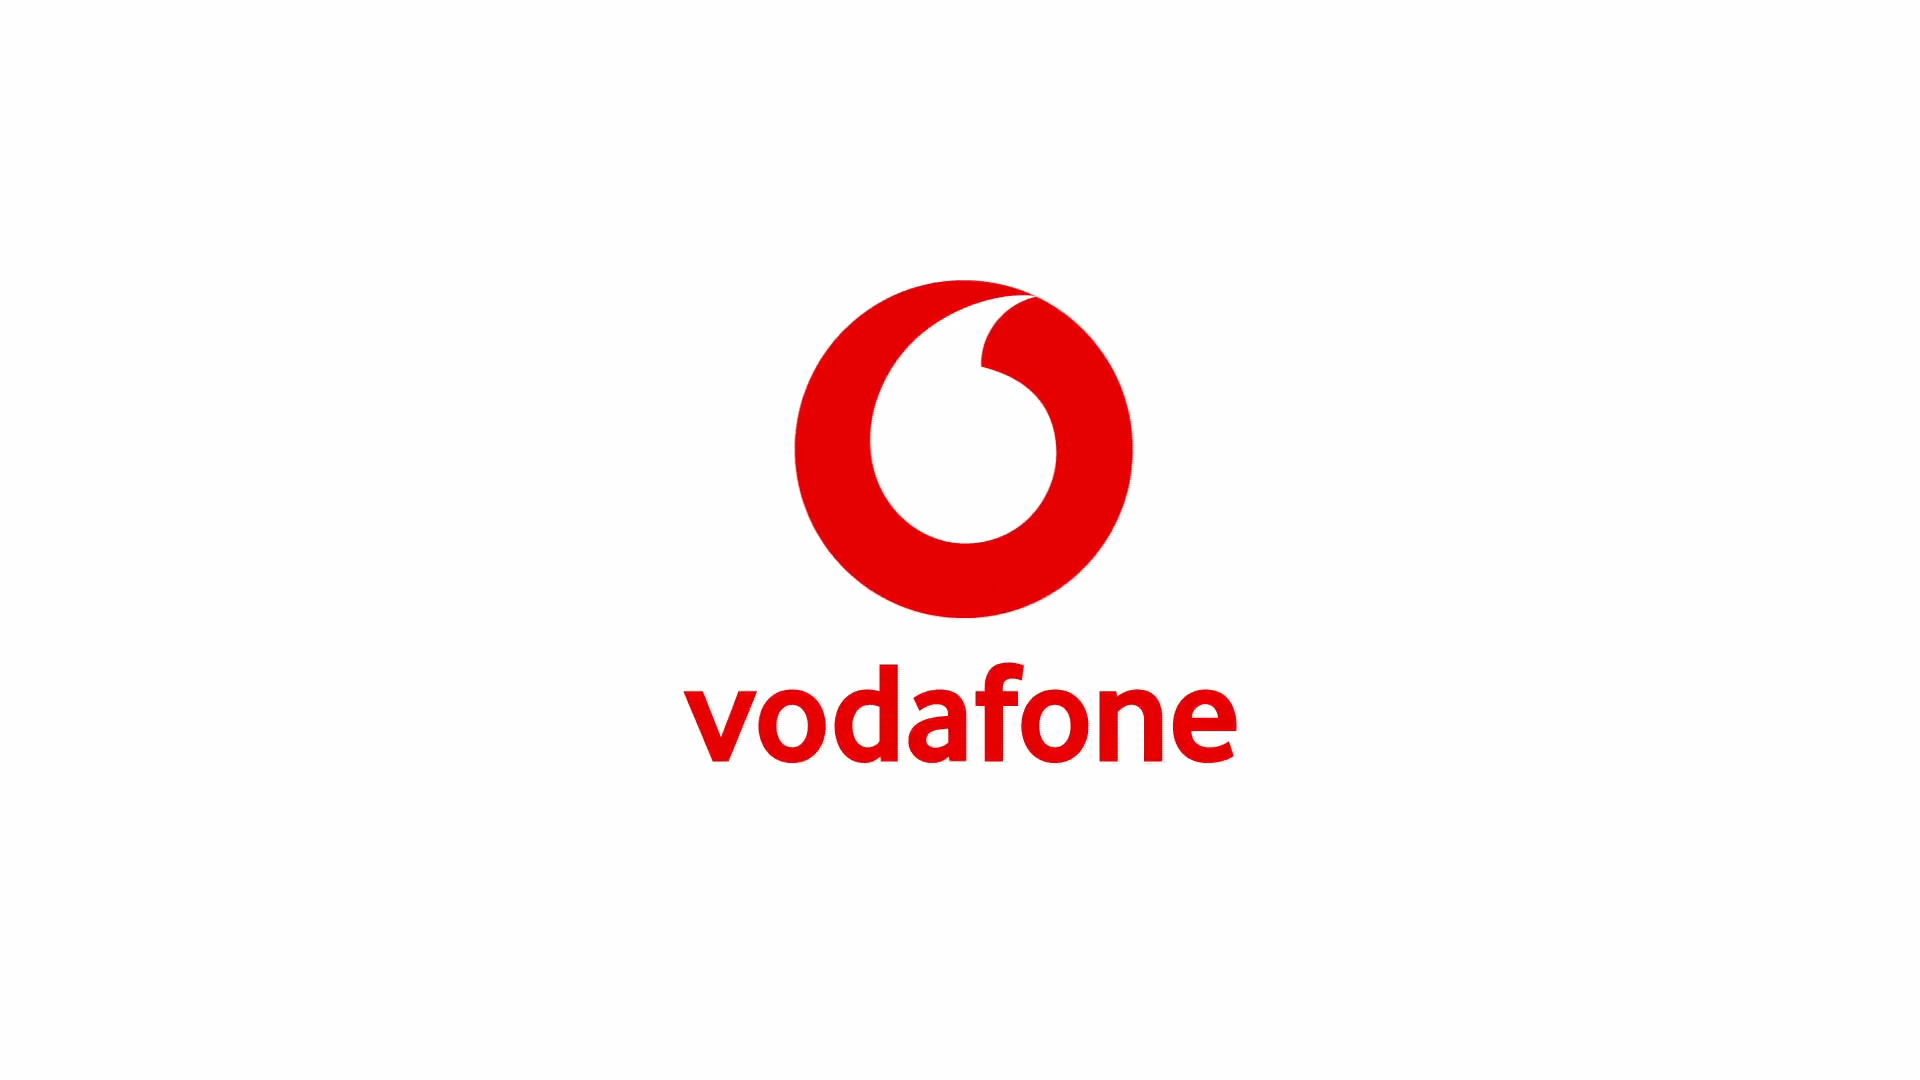 Vodafone Logo Wallpapers - Wallpaper Cave